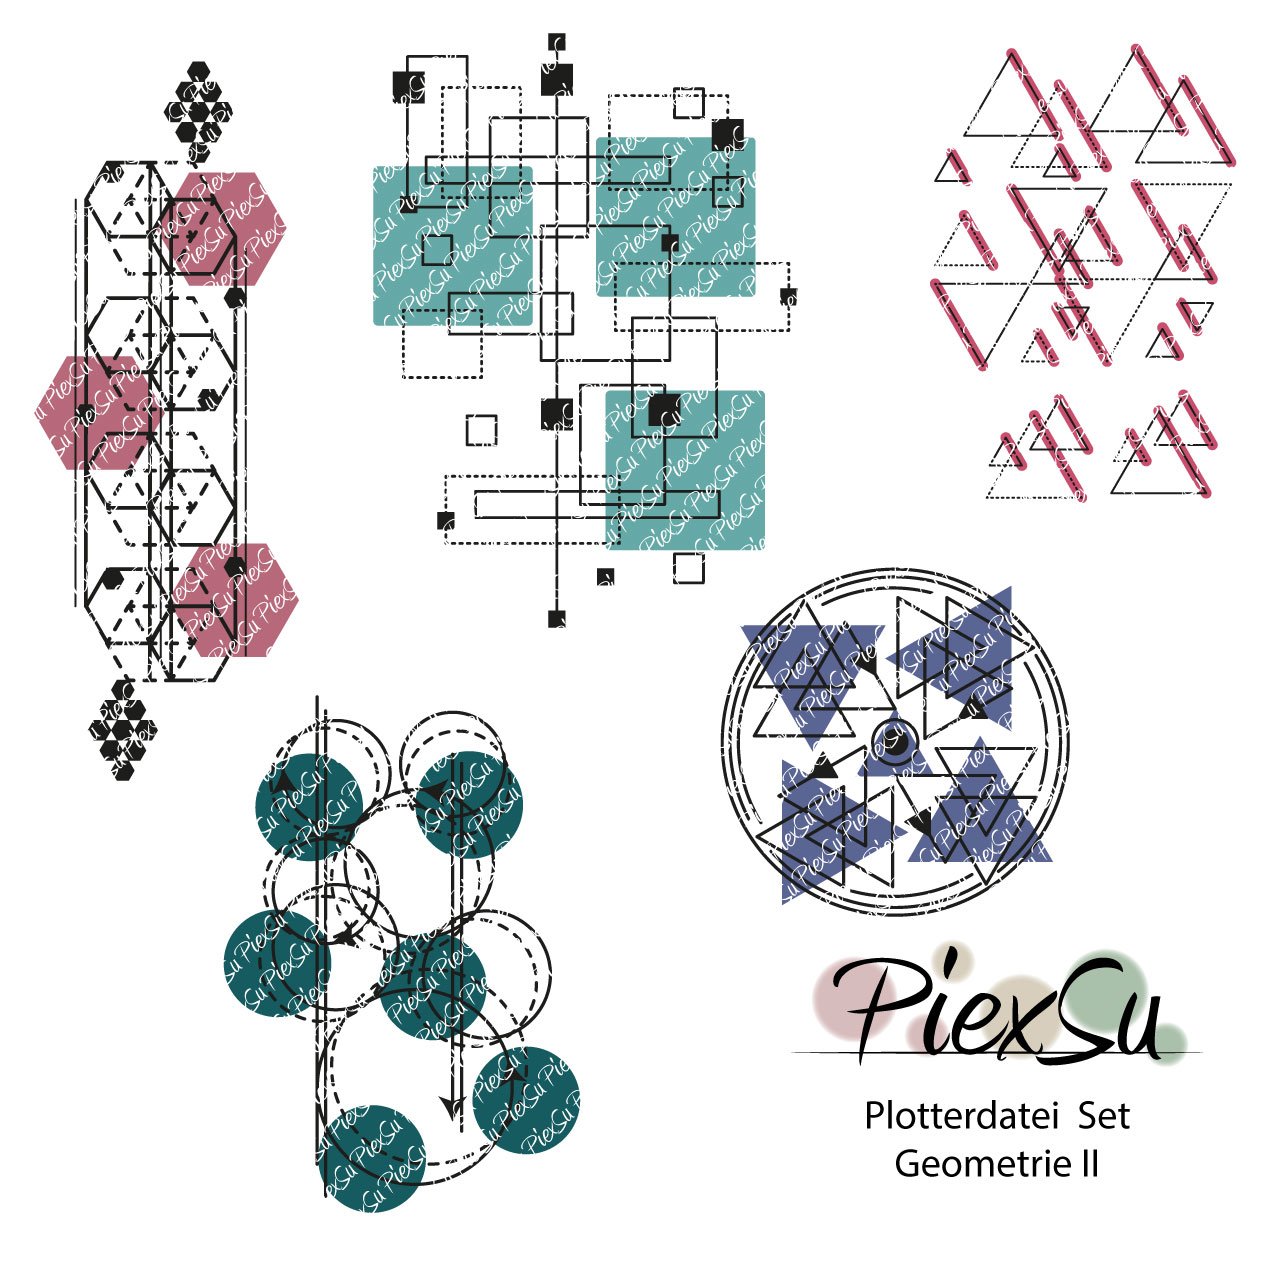 PiexSu-Plotterdatei-Set---Geometrie-II-dxf-svg-plotten